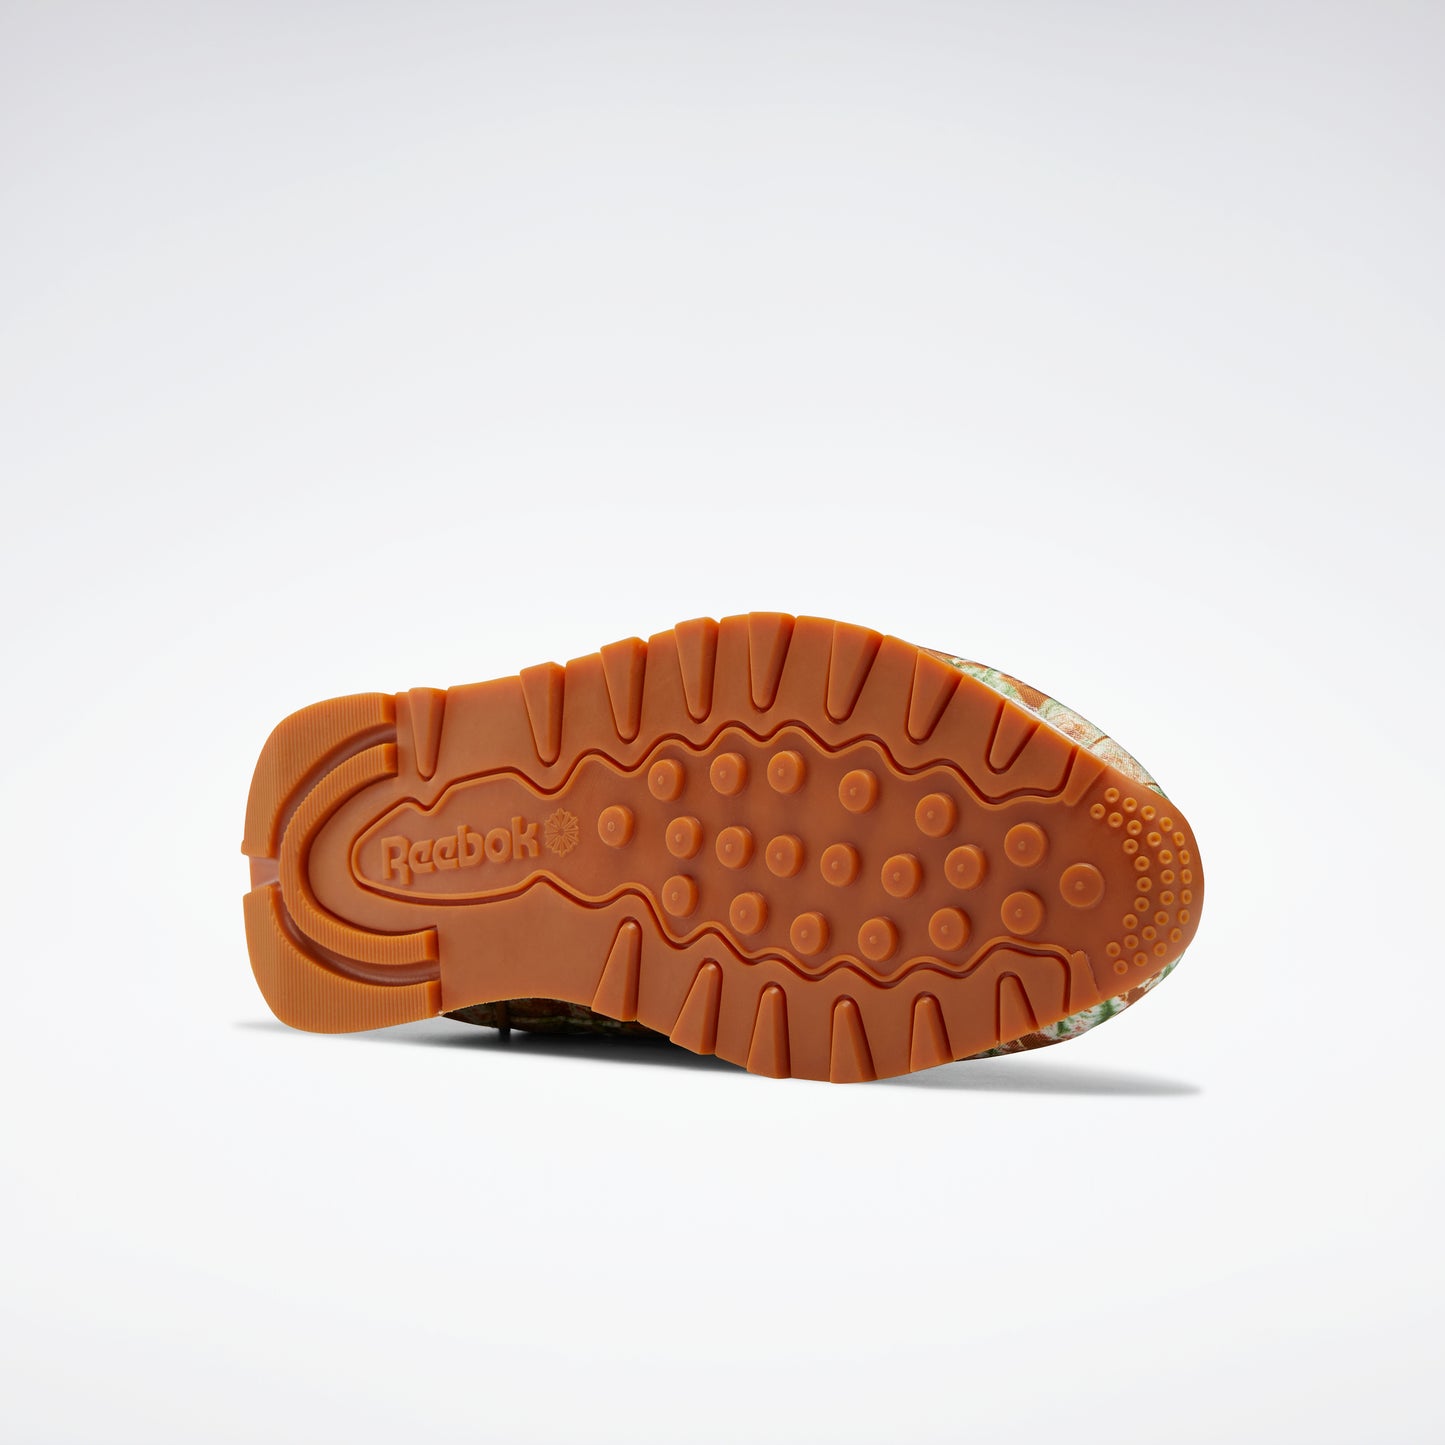 Reebok Footwear Men Classic Leather Lqqk Shoes Wilbrw/Brgoch/Palyel